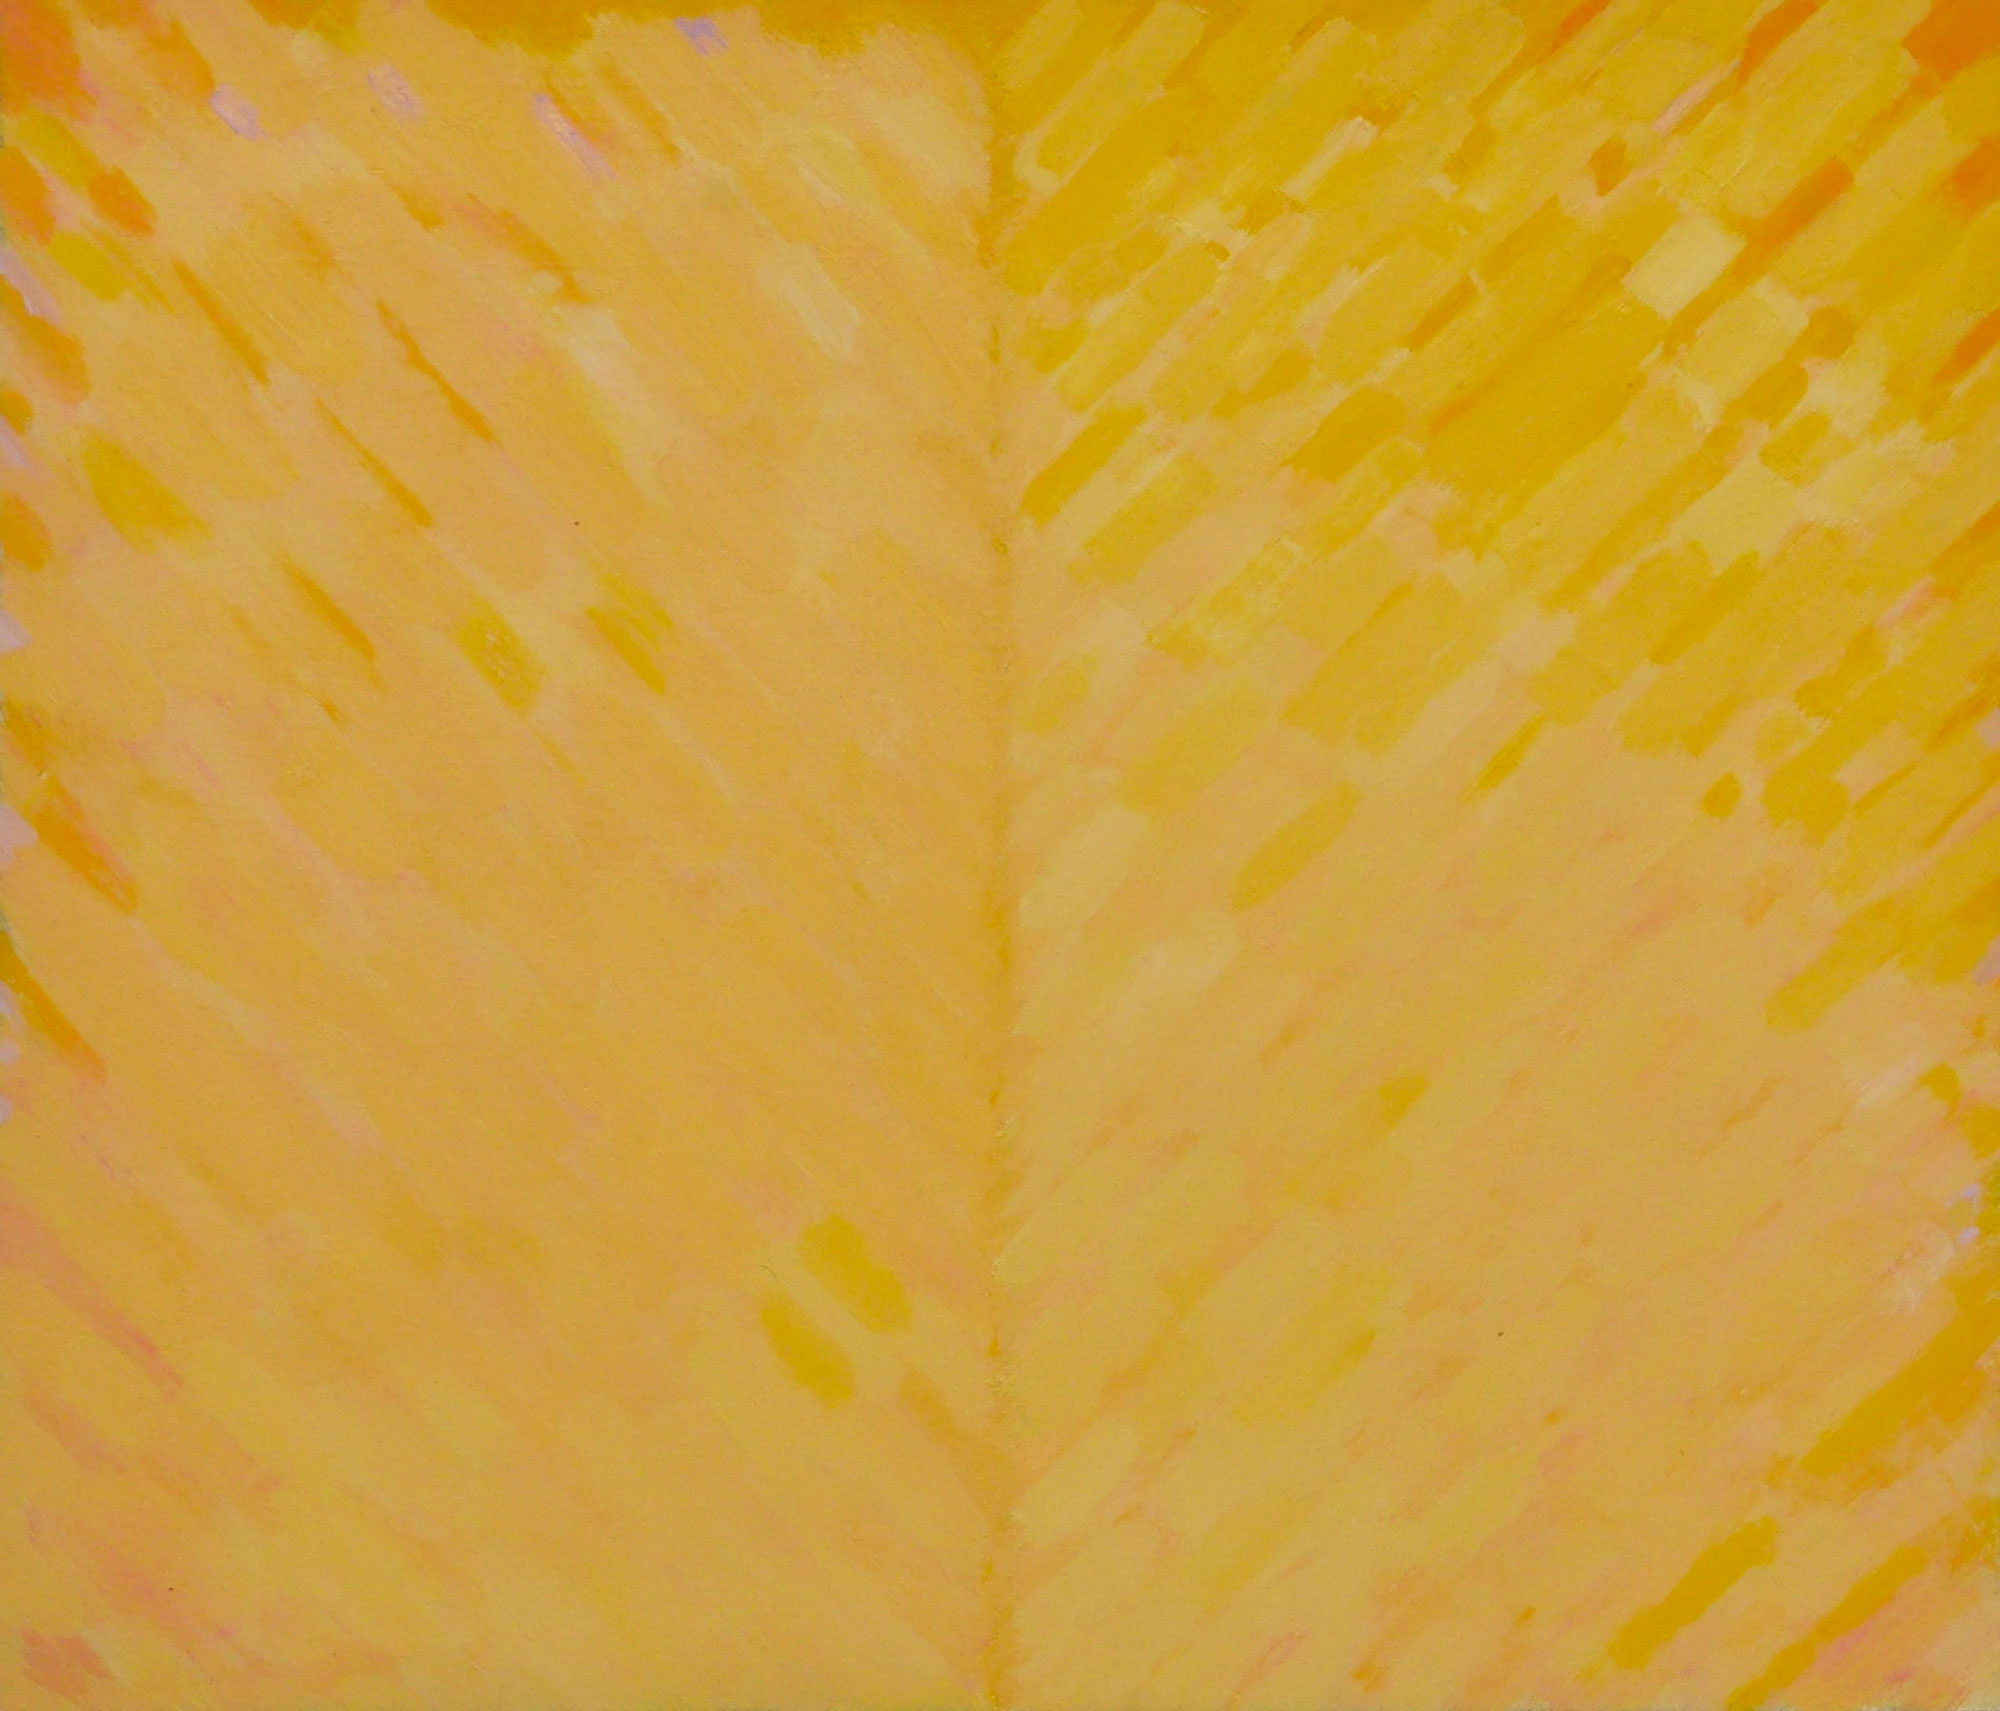 Kenneth Dingwall, Balance series III, 1989, oil on paper, 30.5cm x 35.5cm